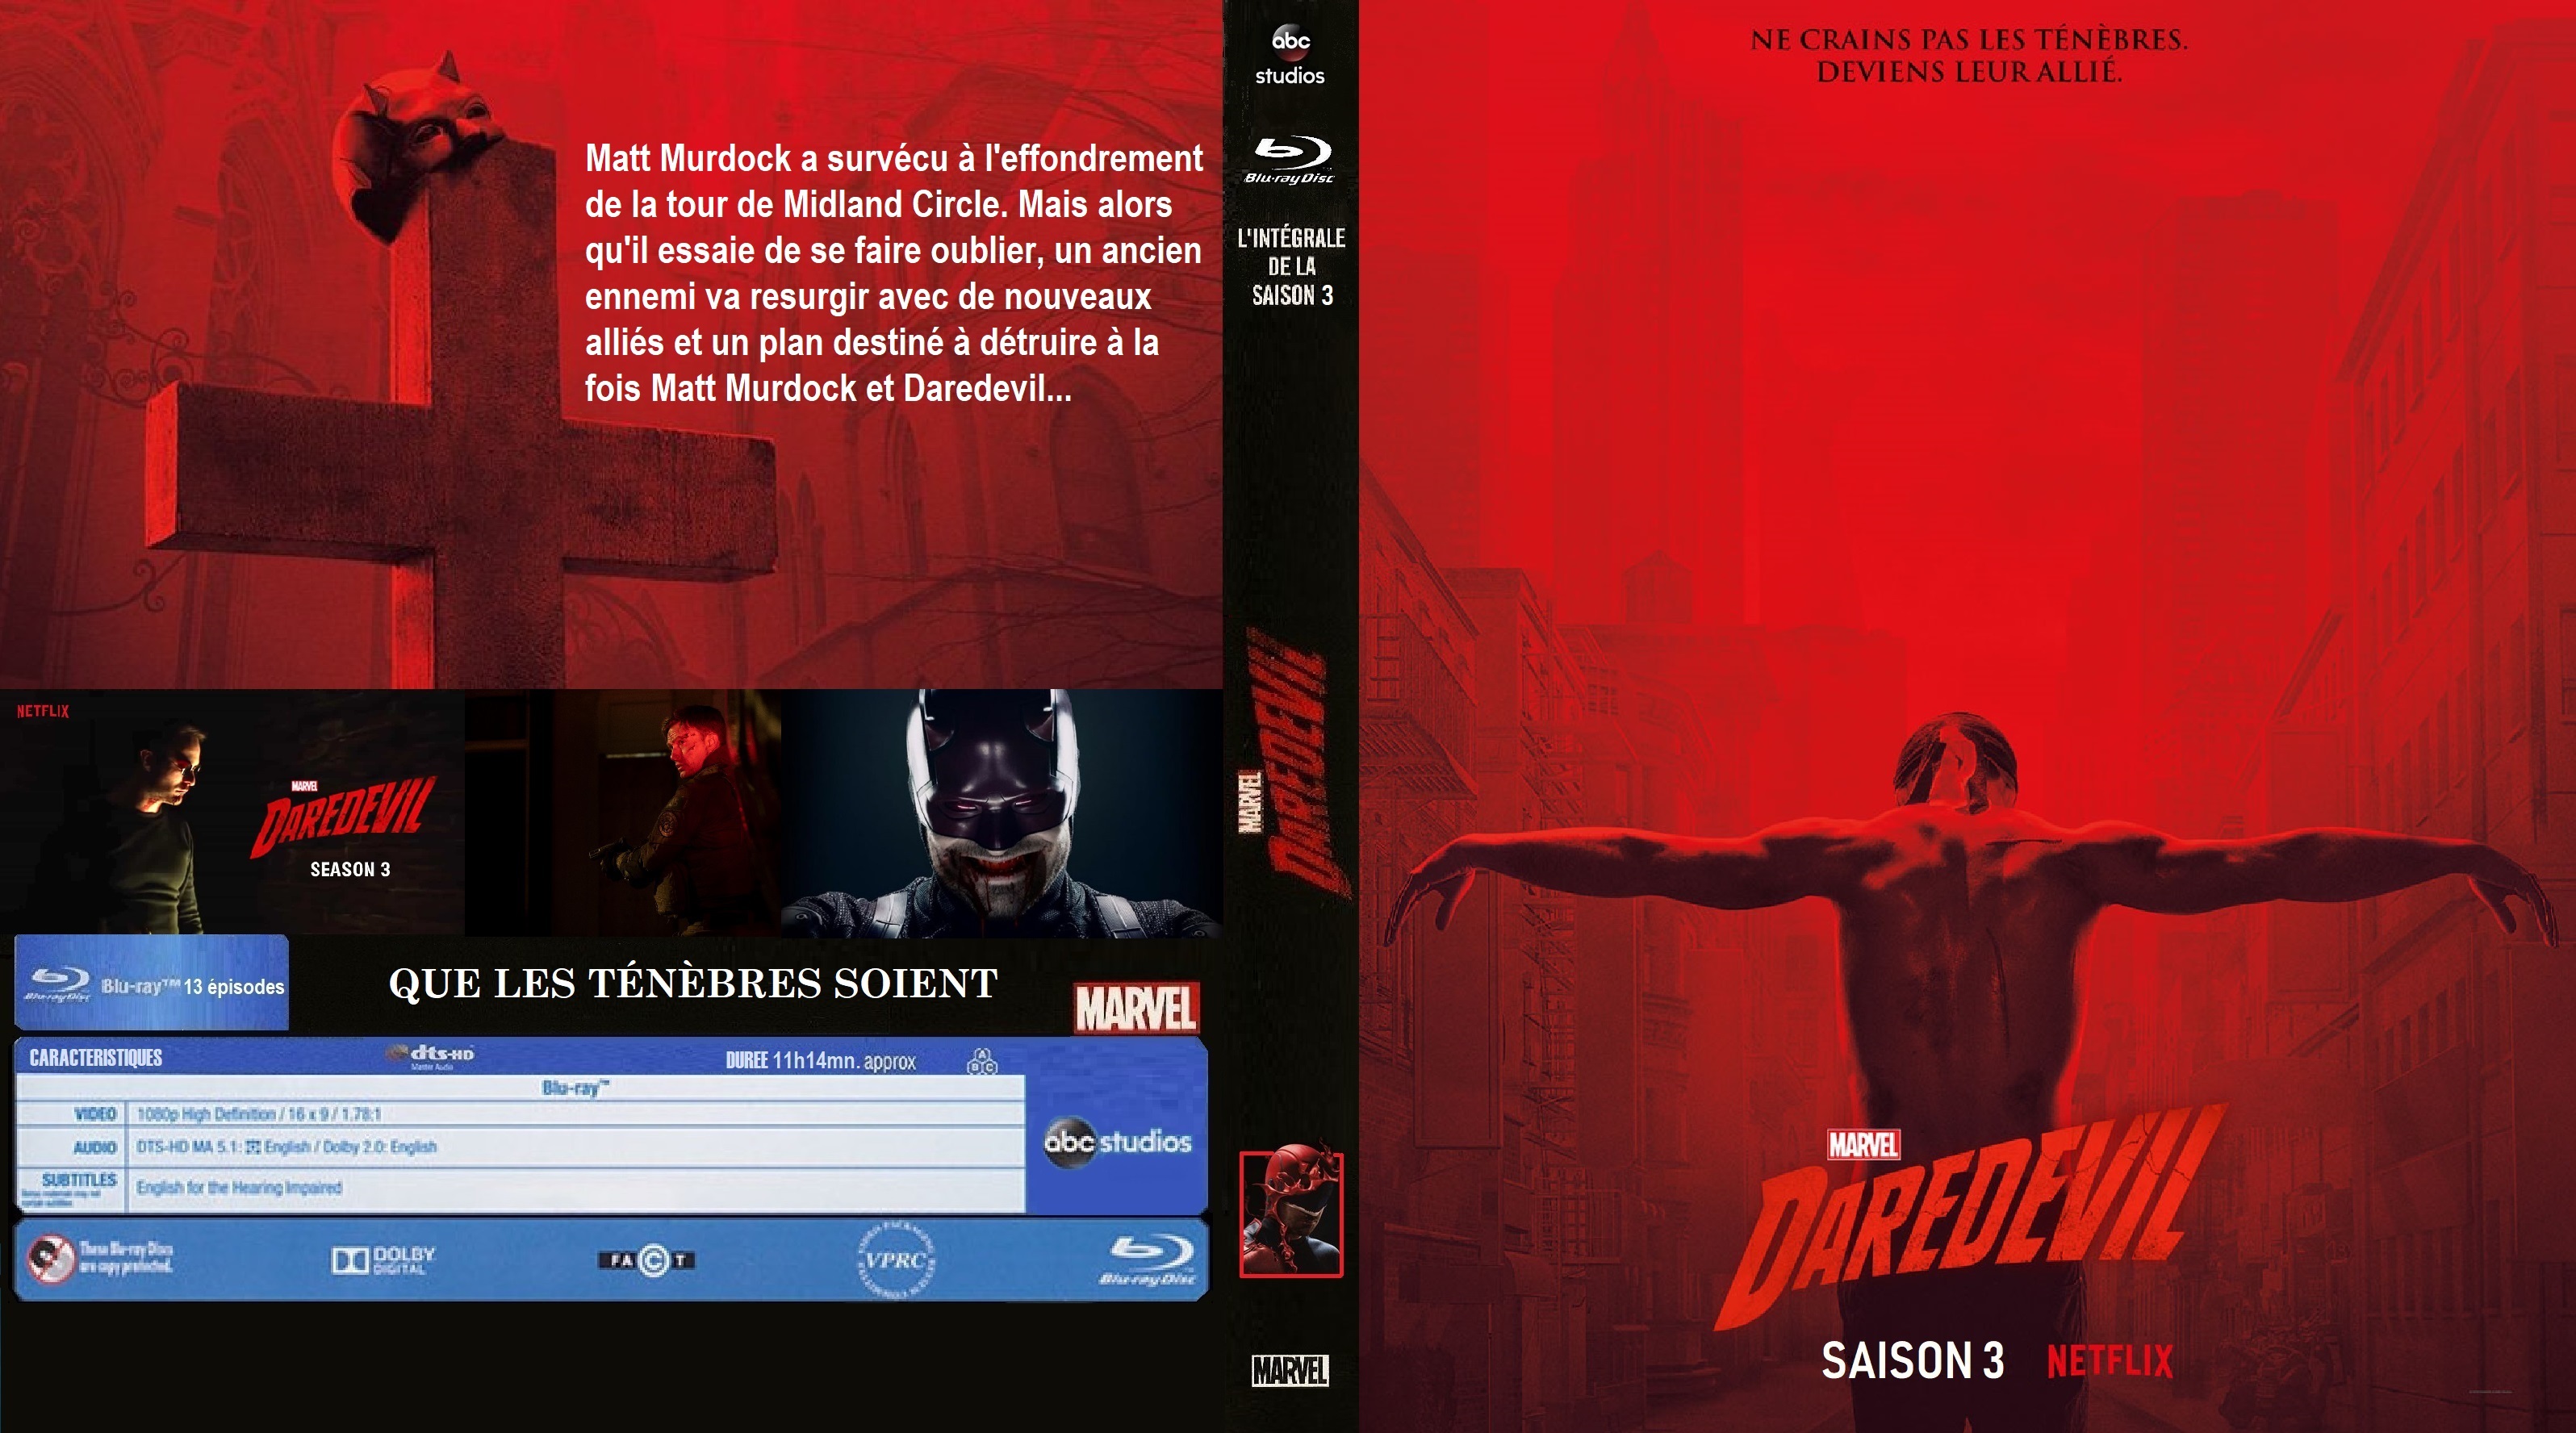 Jaquette DVD Daredevil saison 3 custom (BLU-RAY)